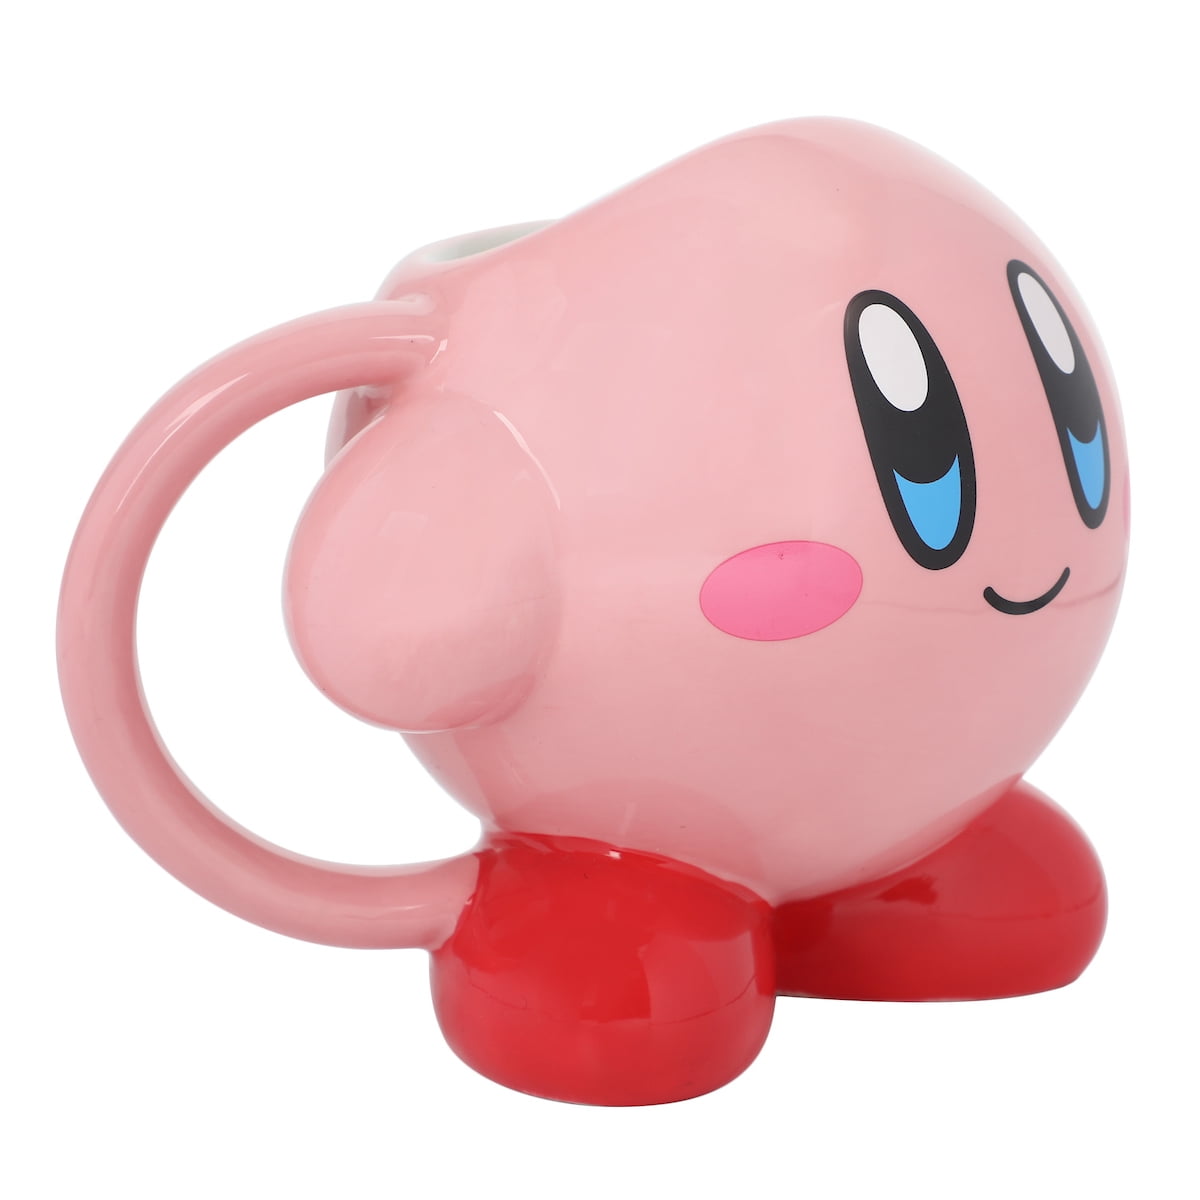 Kirby Big Face 16 Oz Pink Ceramic Mug : Target